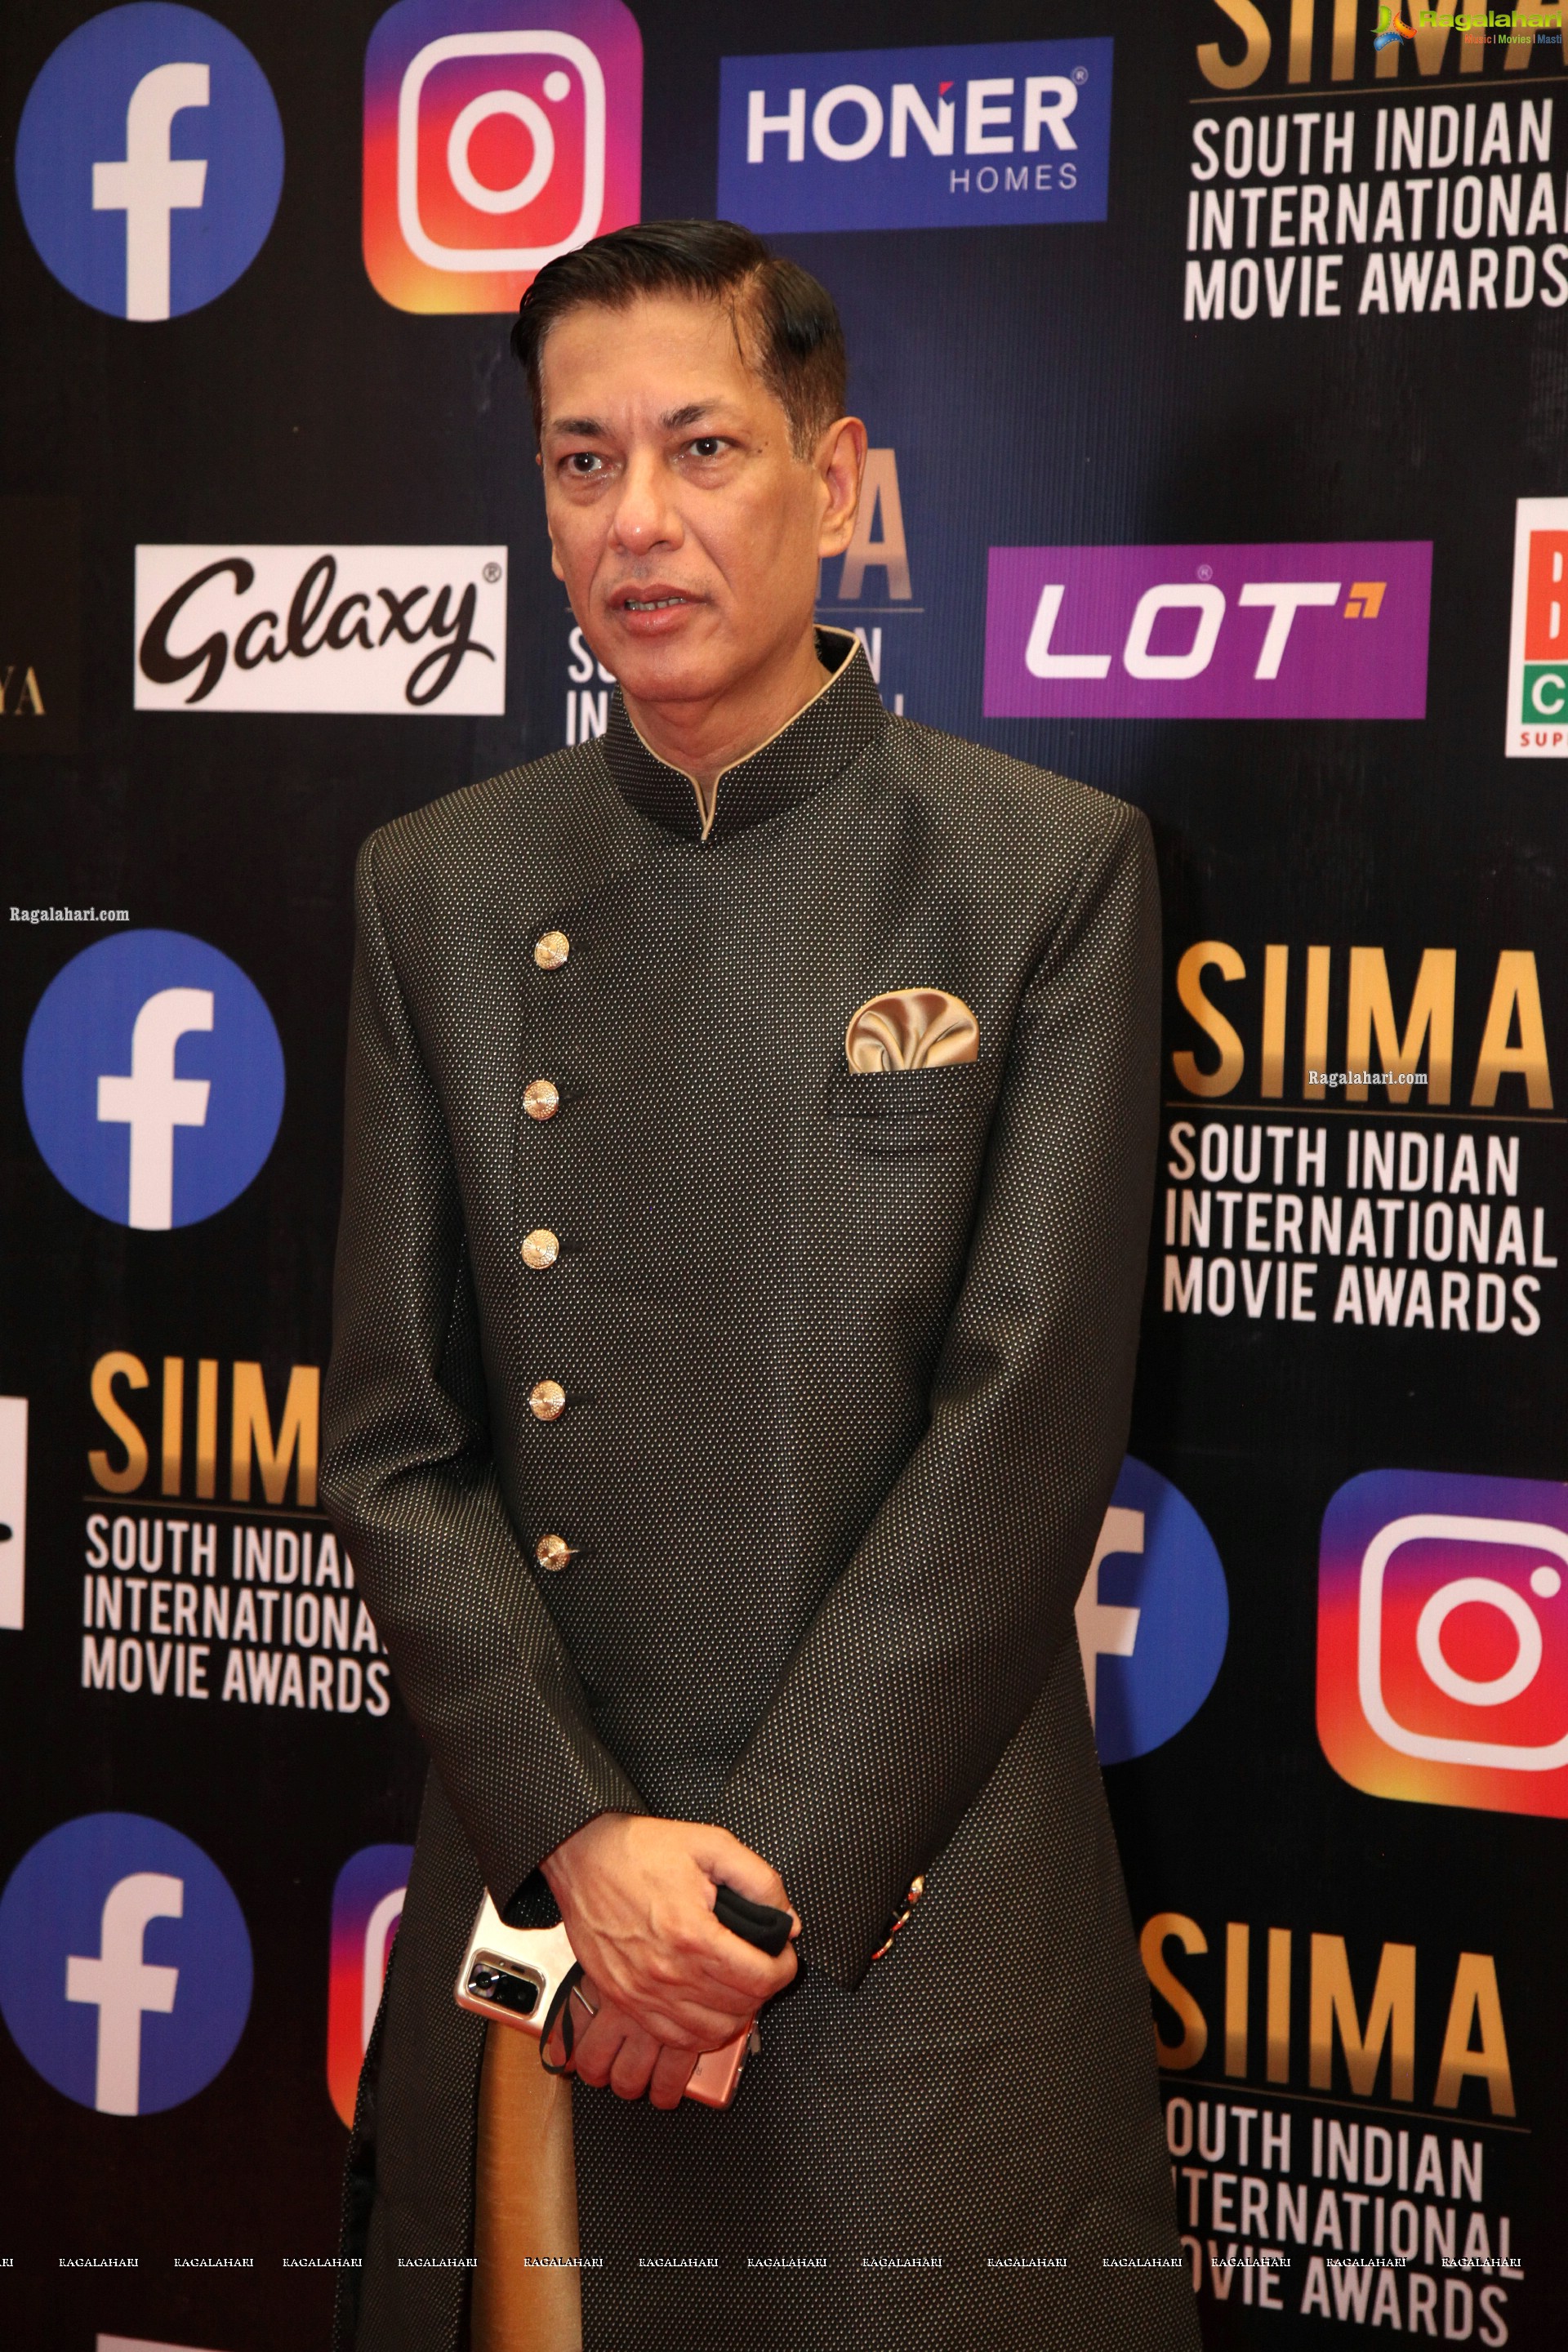 SIIMA: South Indian International Movie Awards 2021, Day 1 at Novotel, Hyderabad